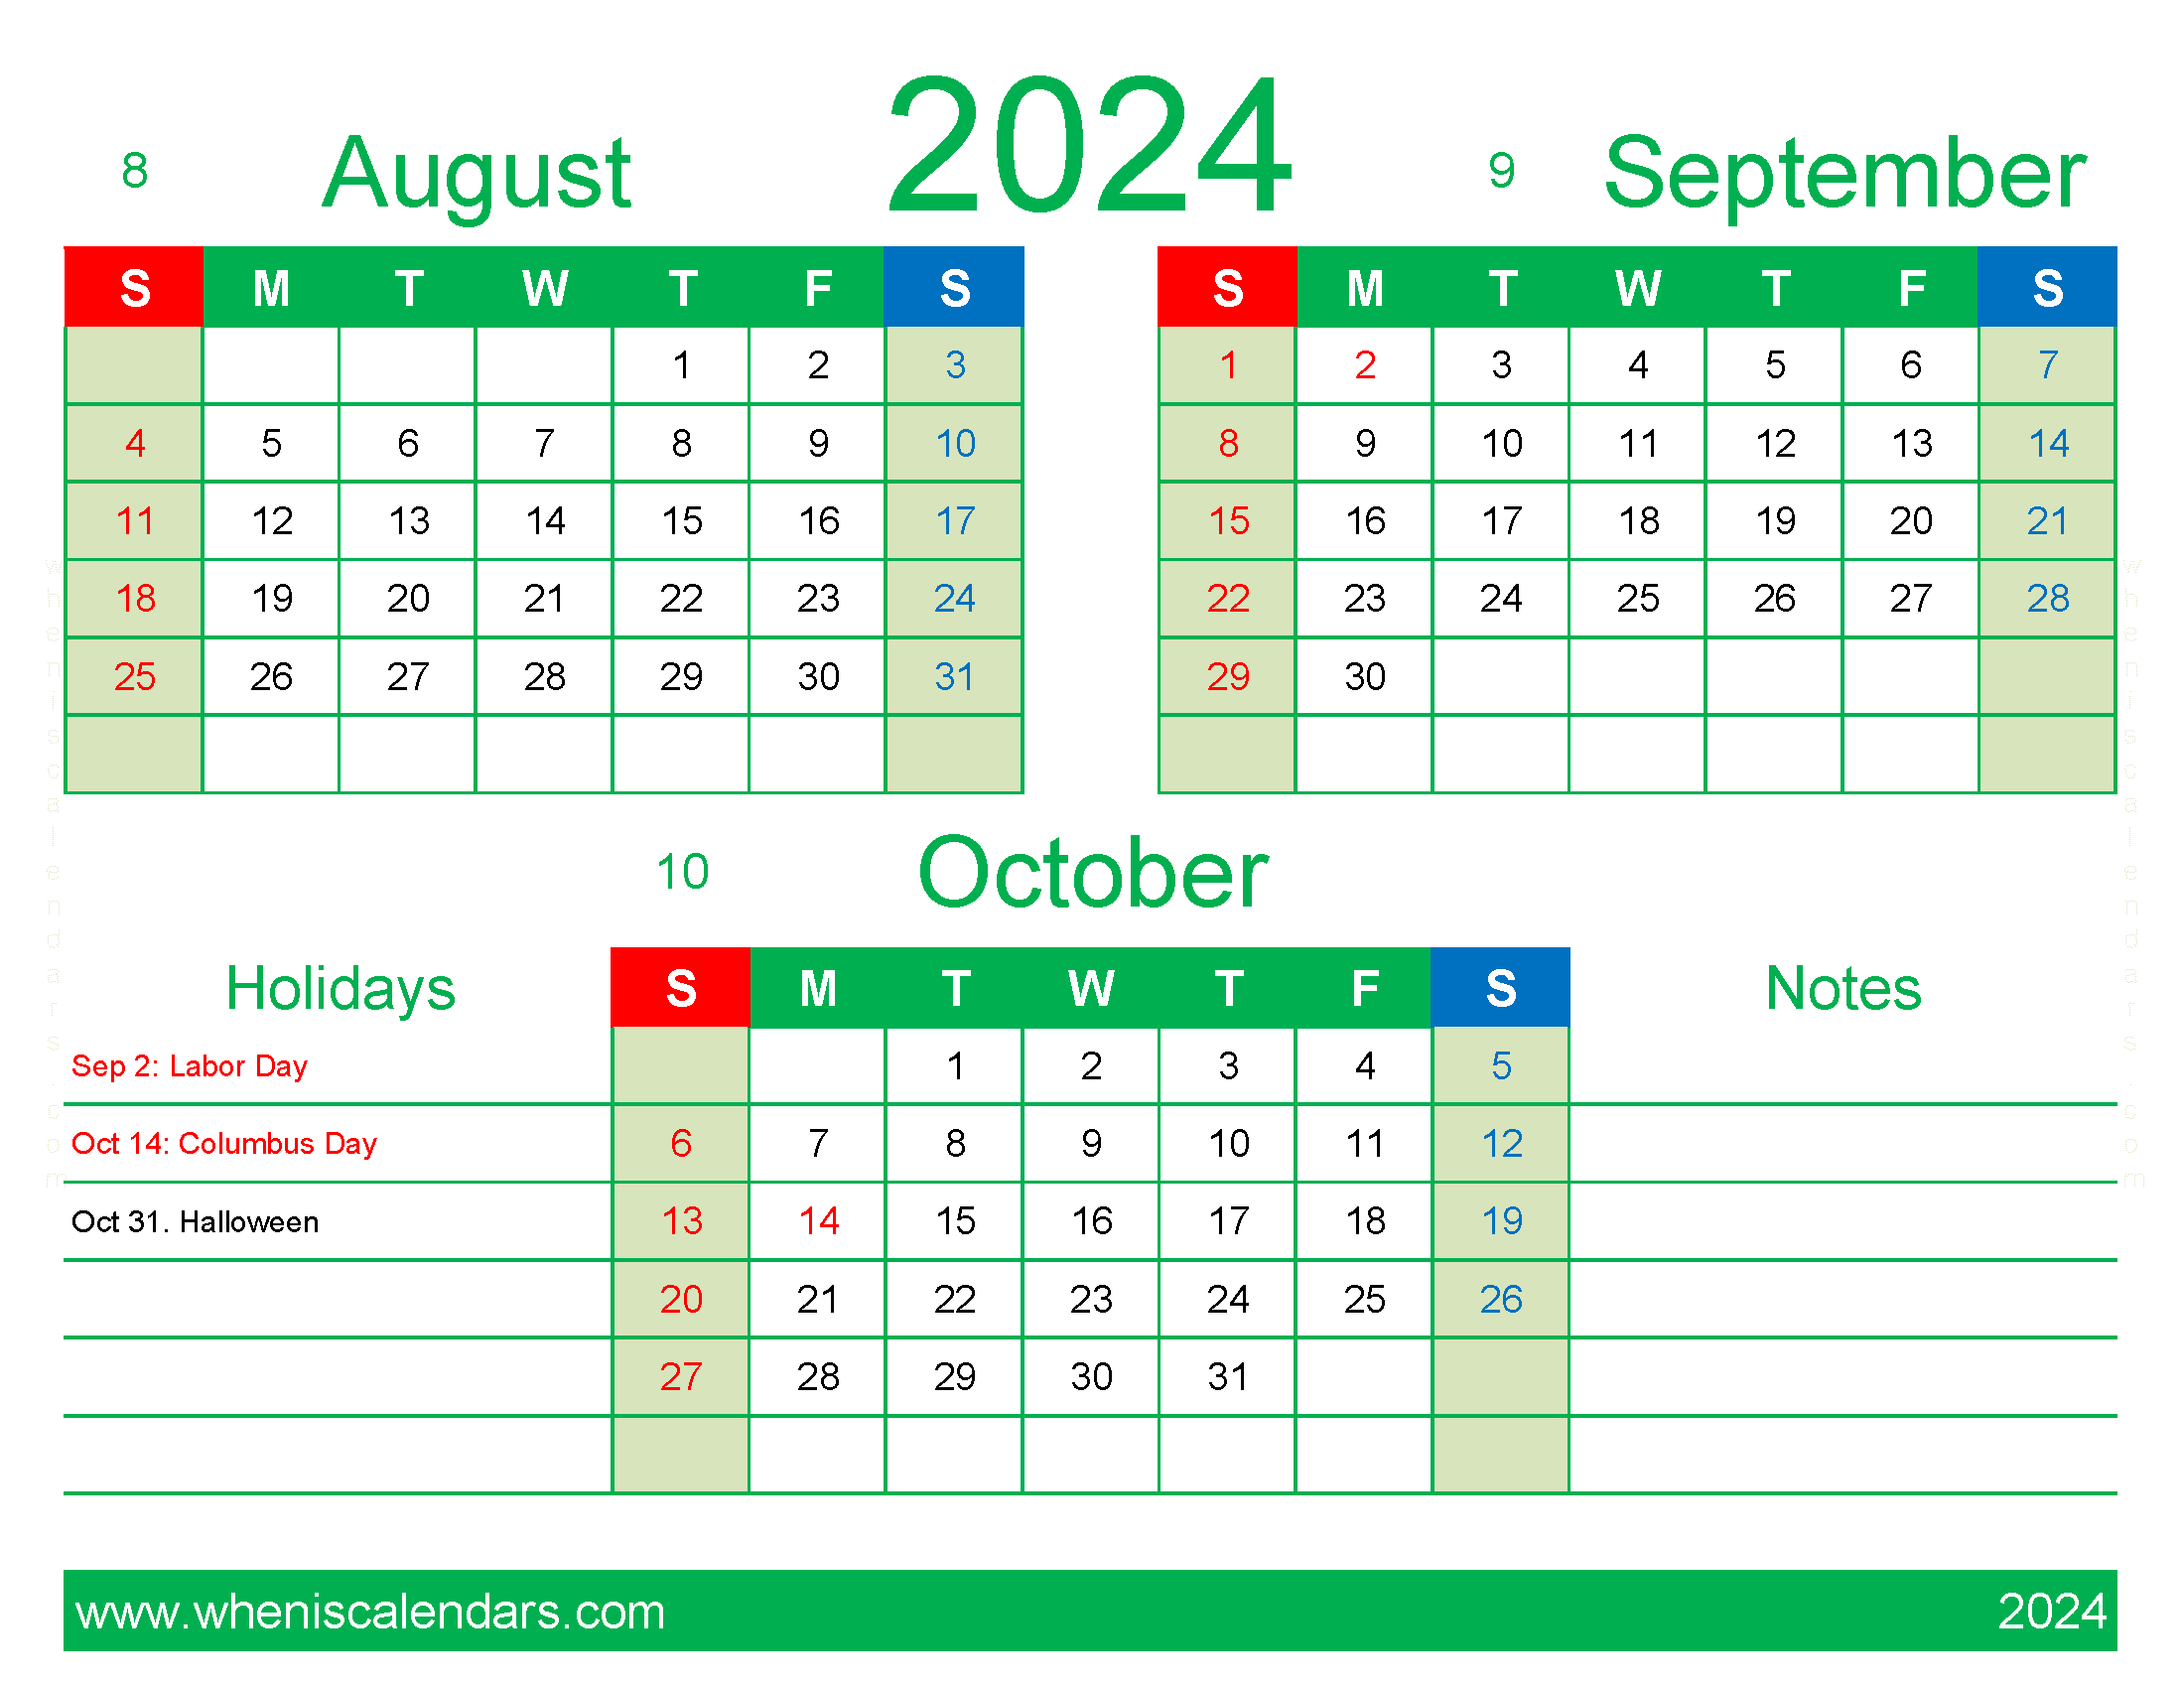 Download 2024 Calendar August September October ASO410